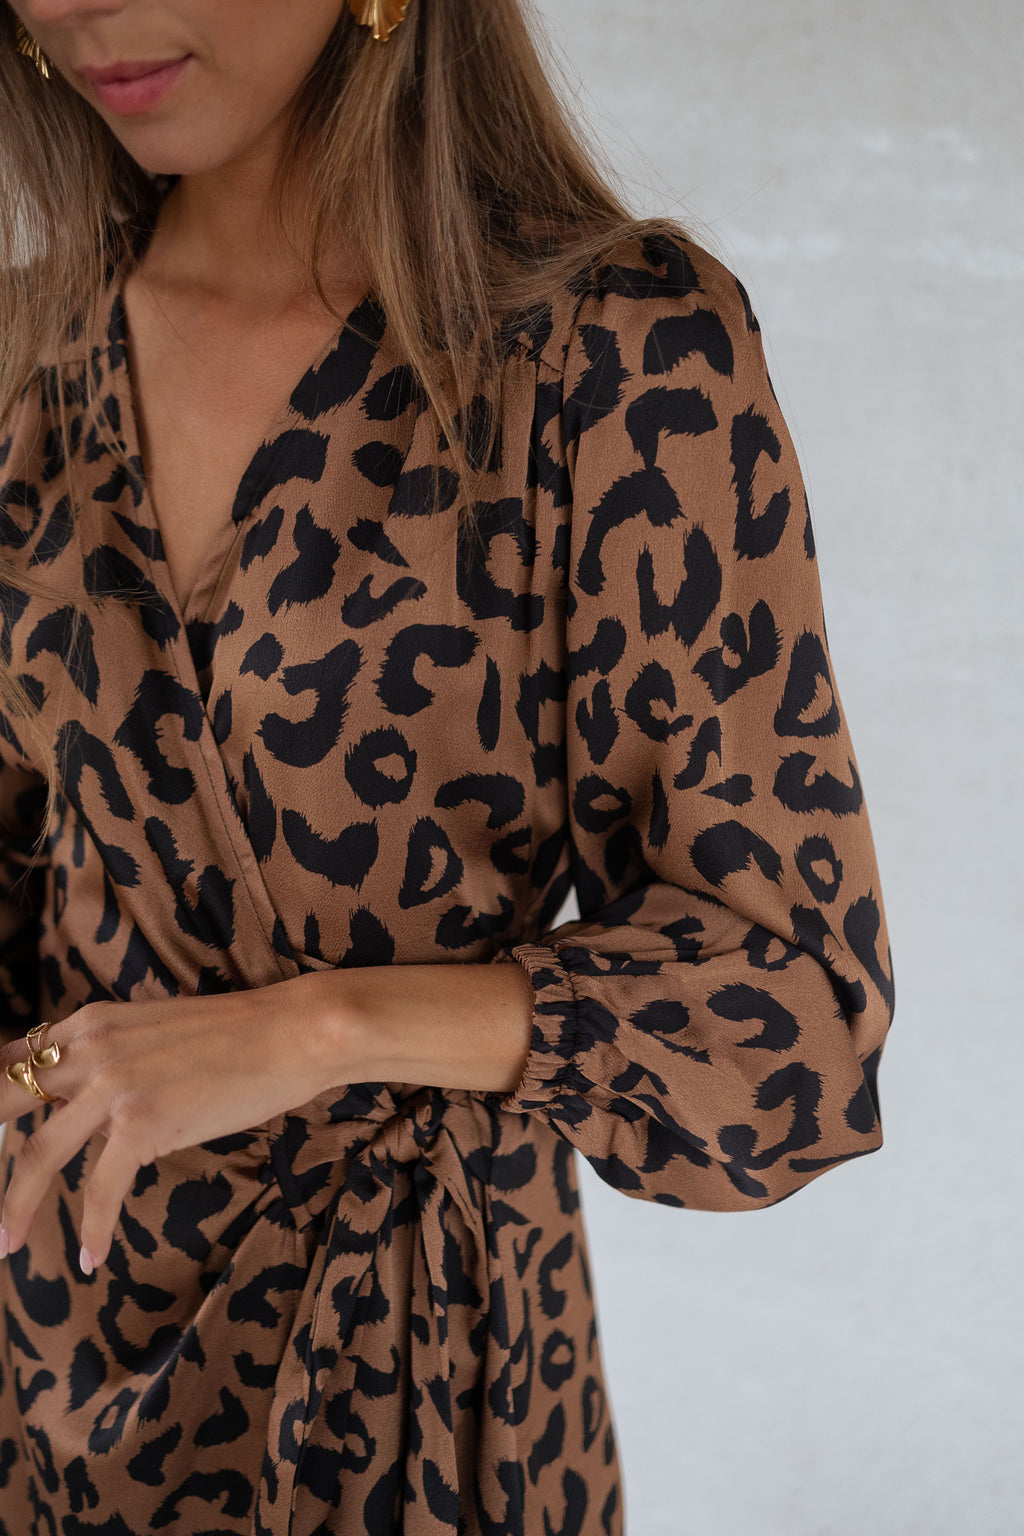 Verona Creation dress - leopard